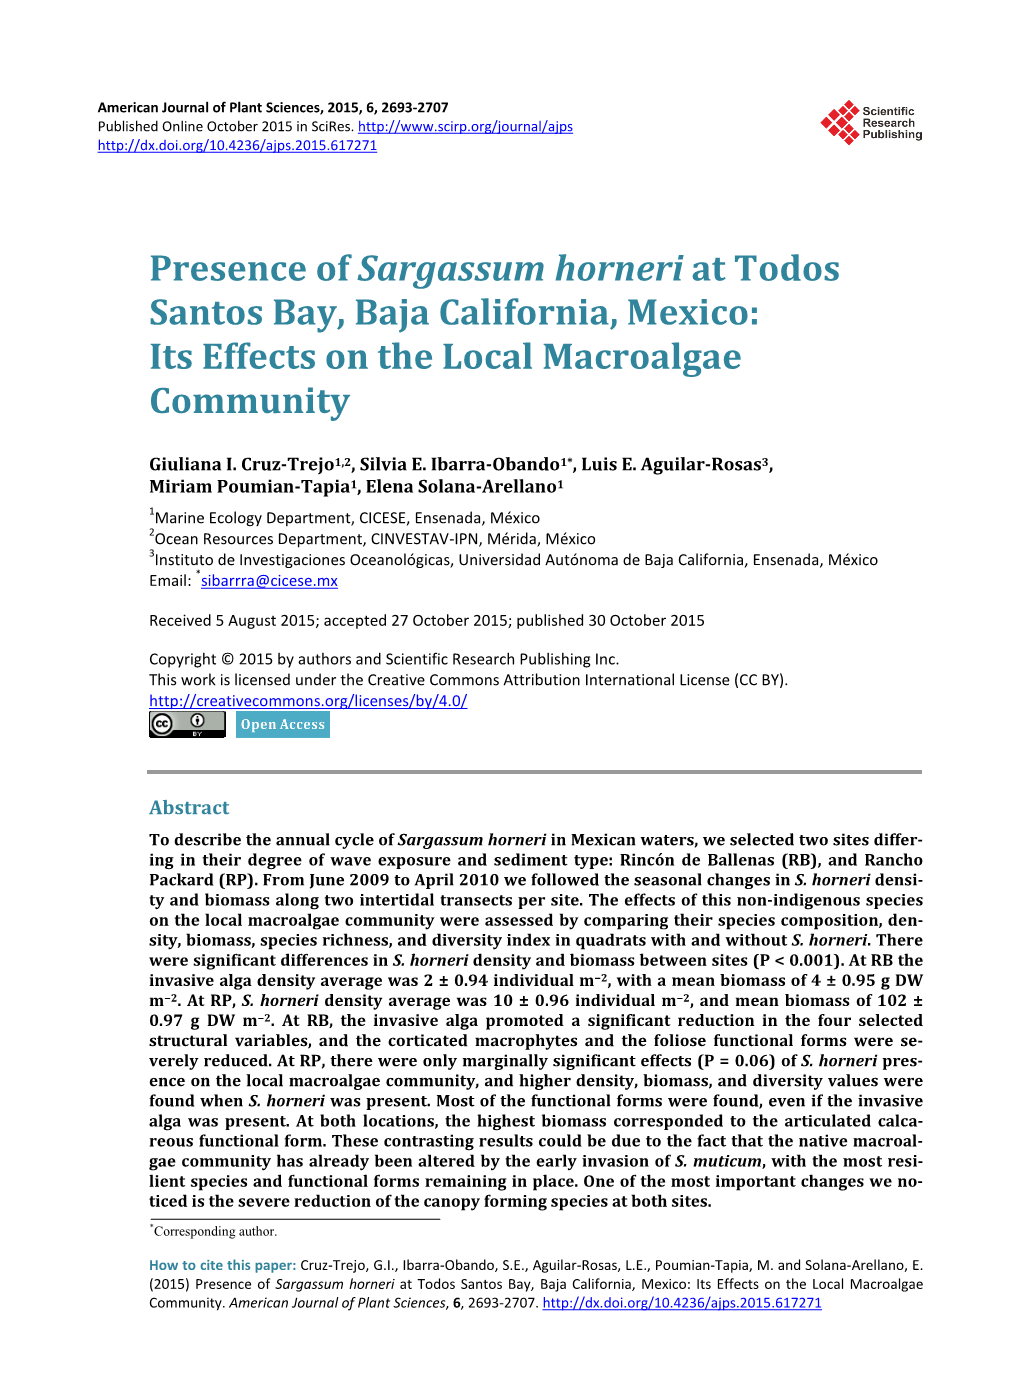 Presence of Sargassum Horneri at Todos Santos Bay, Baja California, Mexico: Its Effects on the Local Macroalgae Community